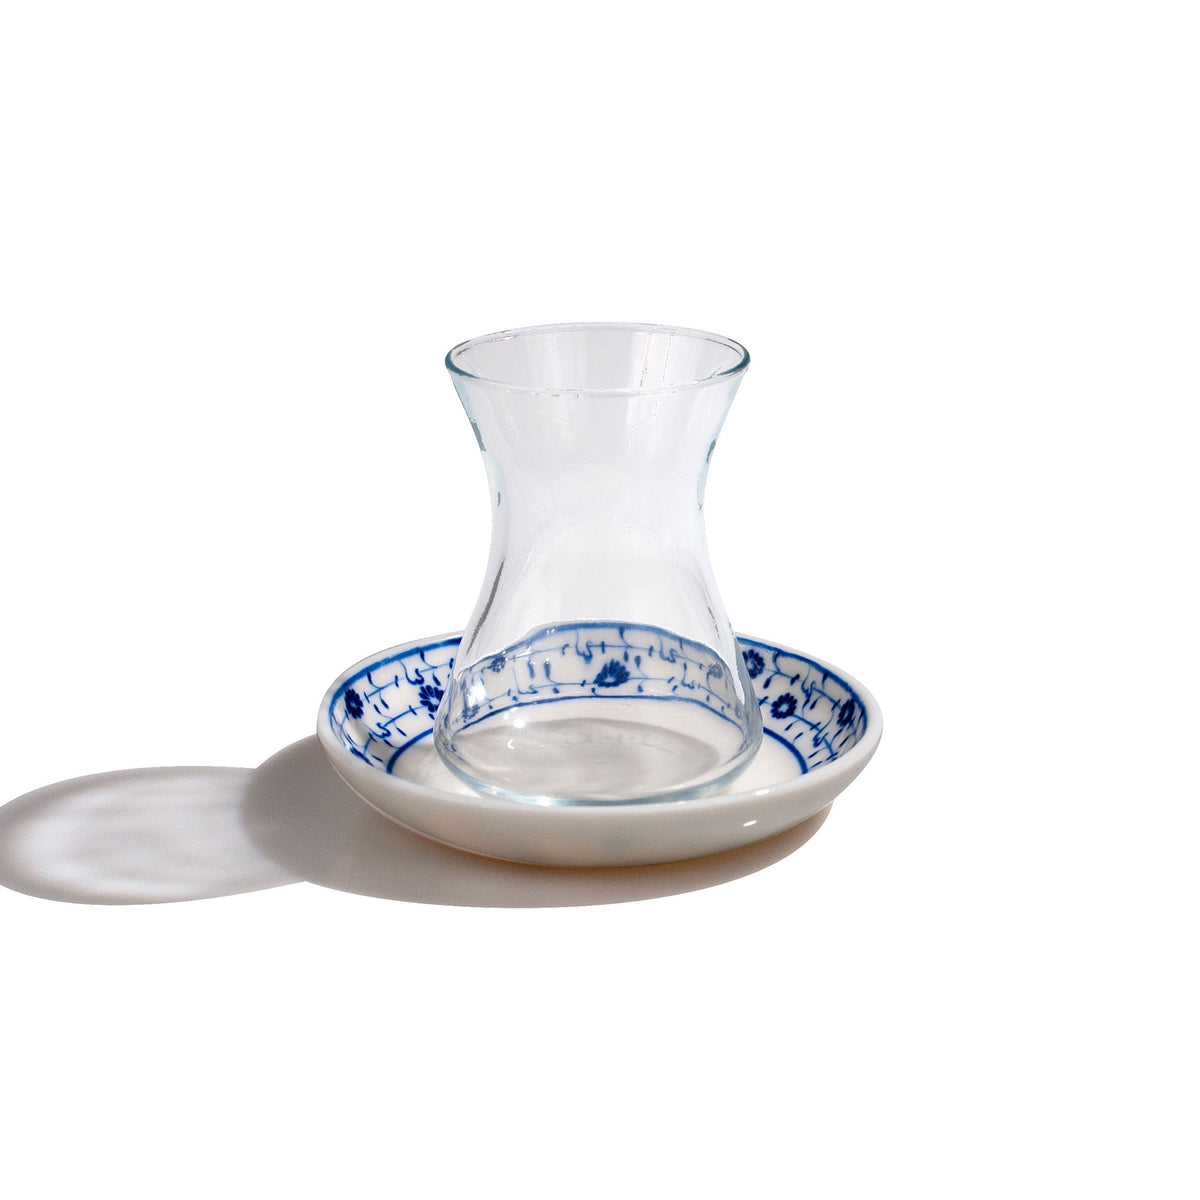 Golden Horn Design Turkish Tea Cup and Saucer